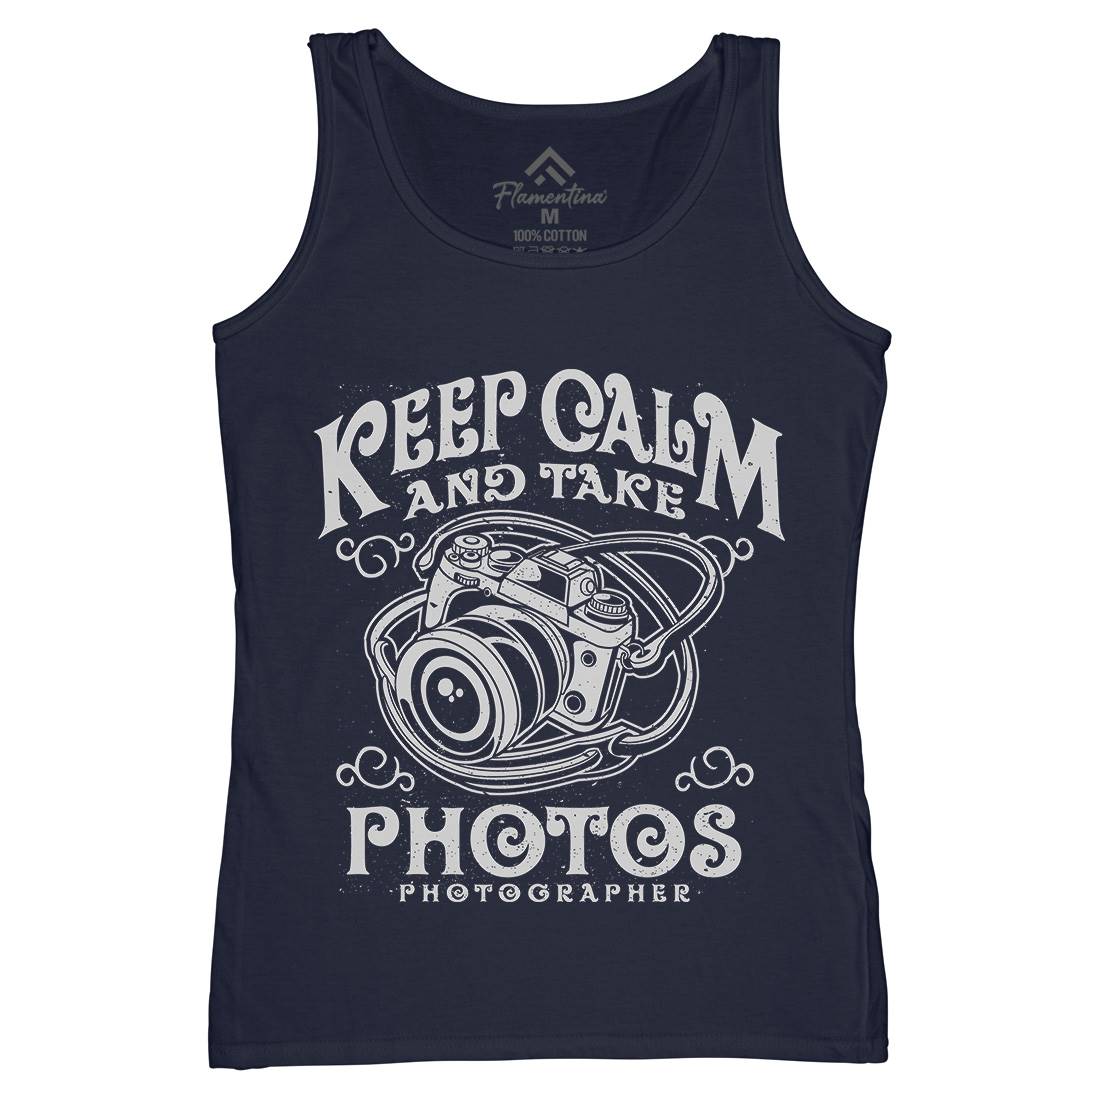 Keep Calm And Take Photos Womens Organic Tank Top Vest Media A073